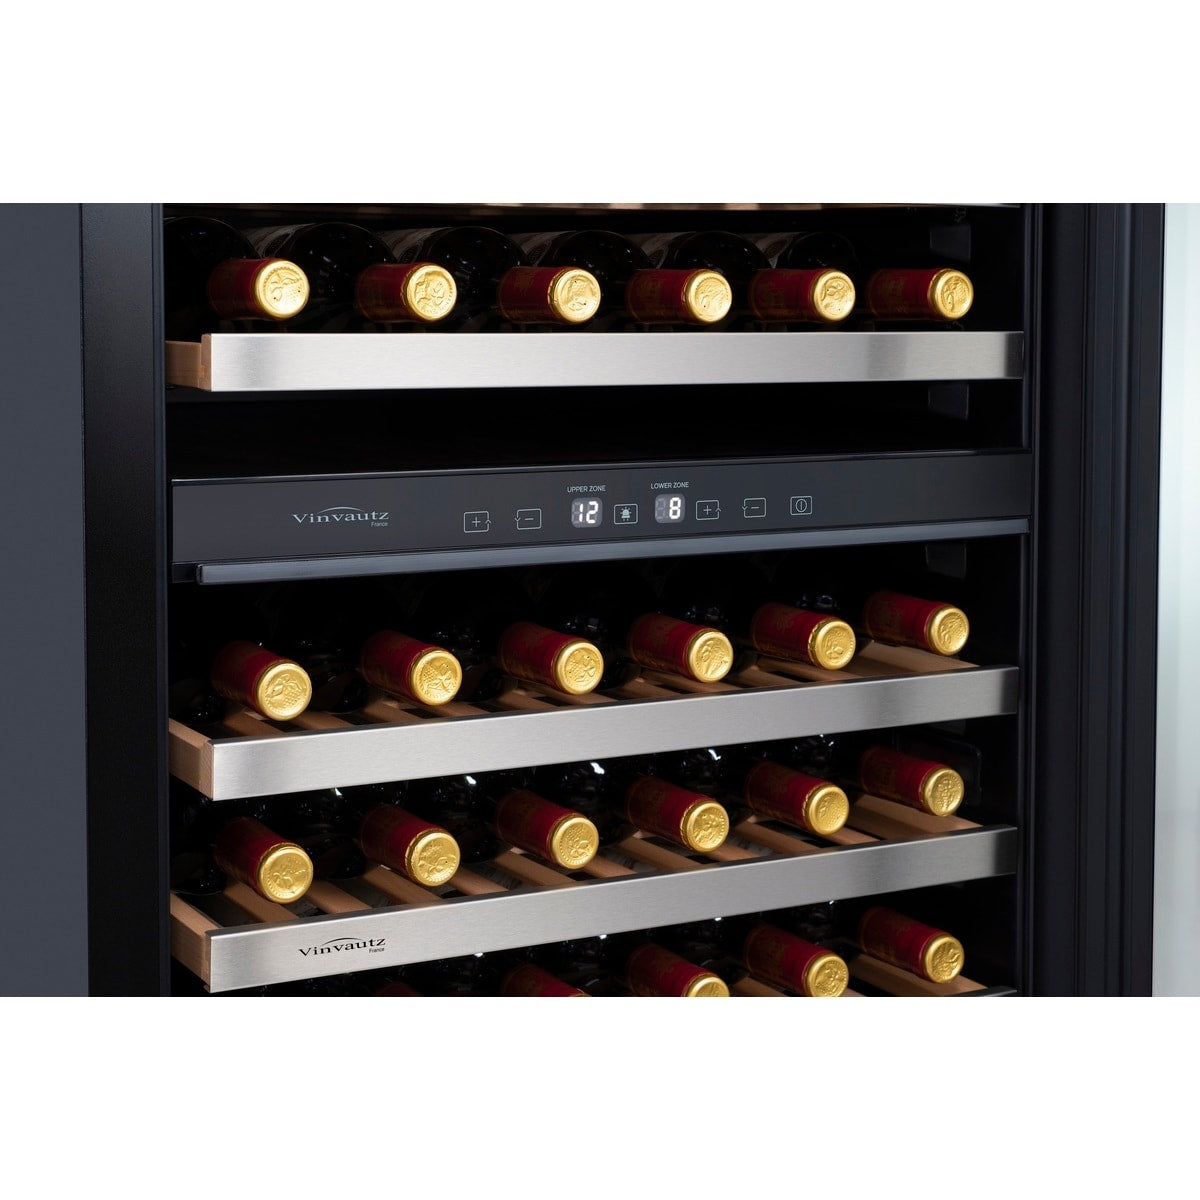 【Vinvautz】110 Bottles Dual-Zone Built-in Wine Cellar VZ110SDUG